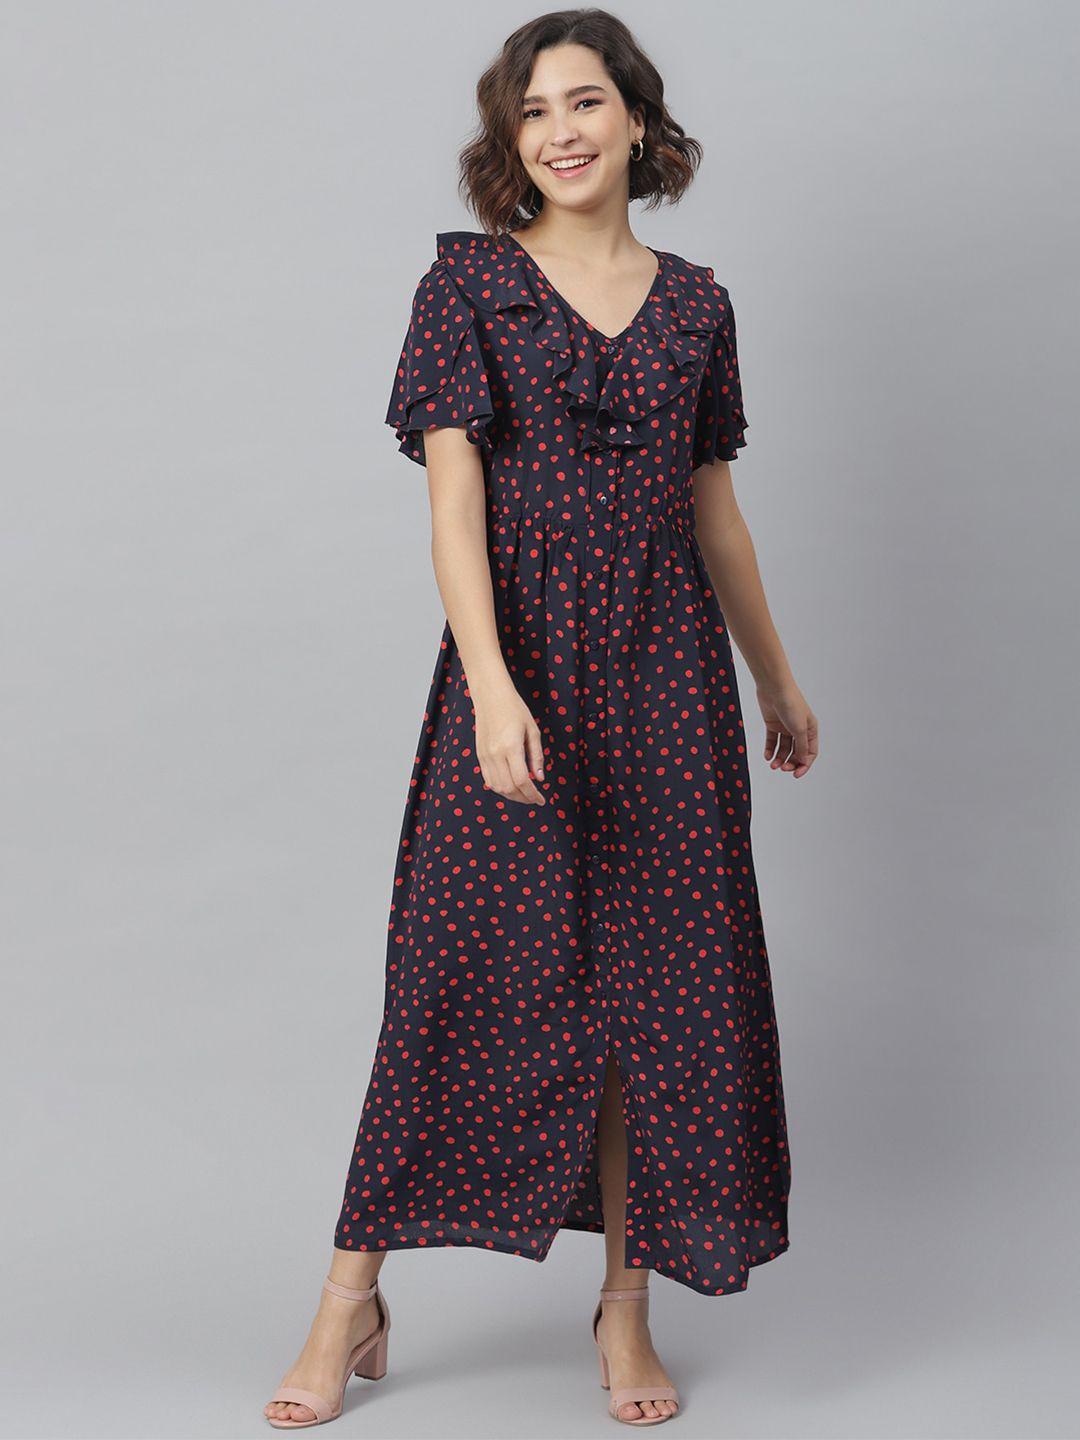 stylestone women navy blue printed maxi dress